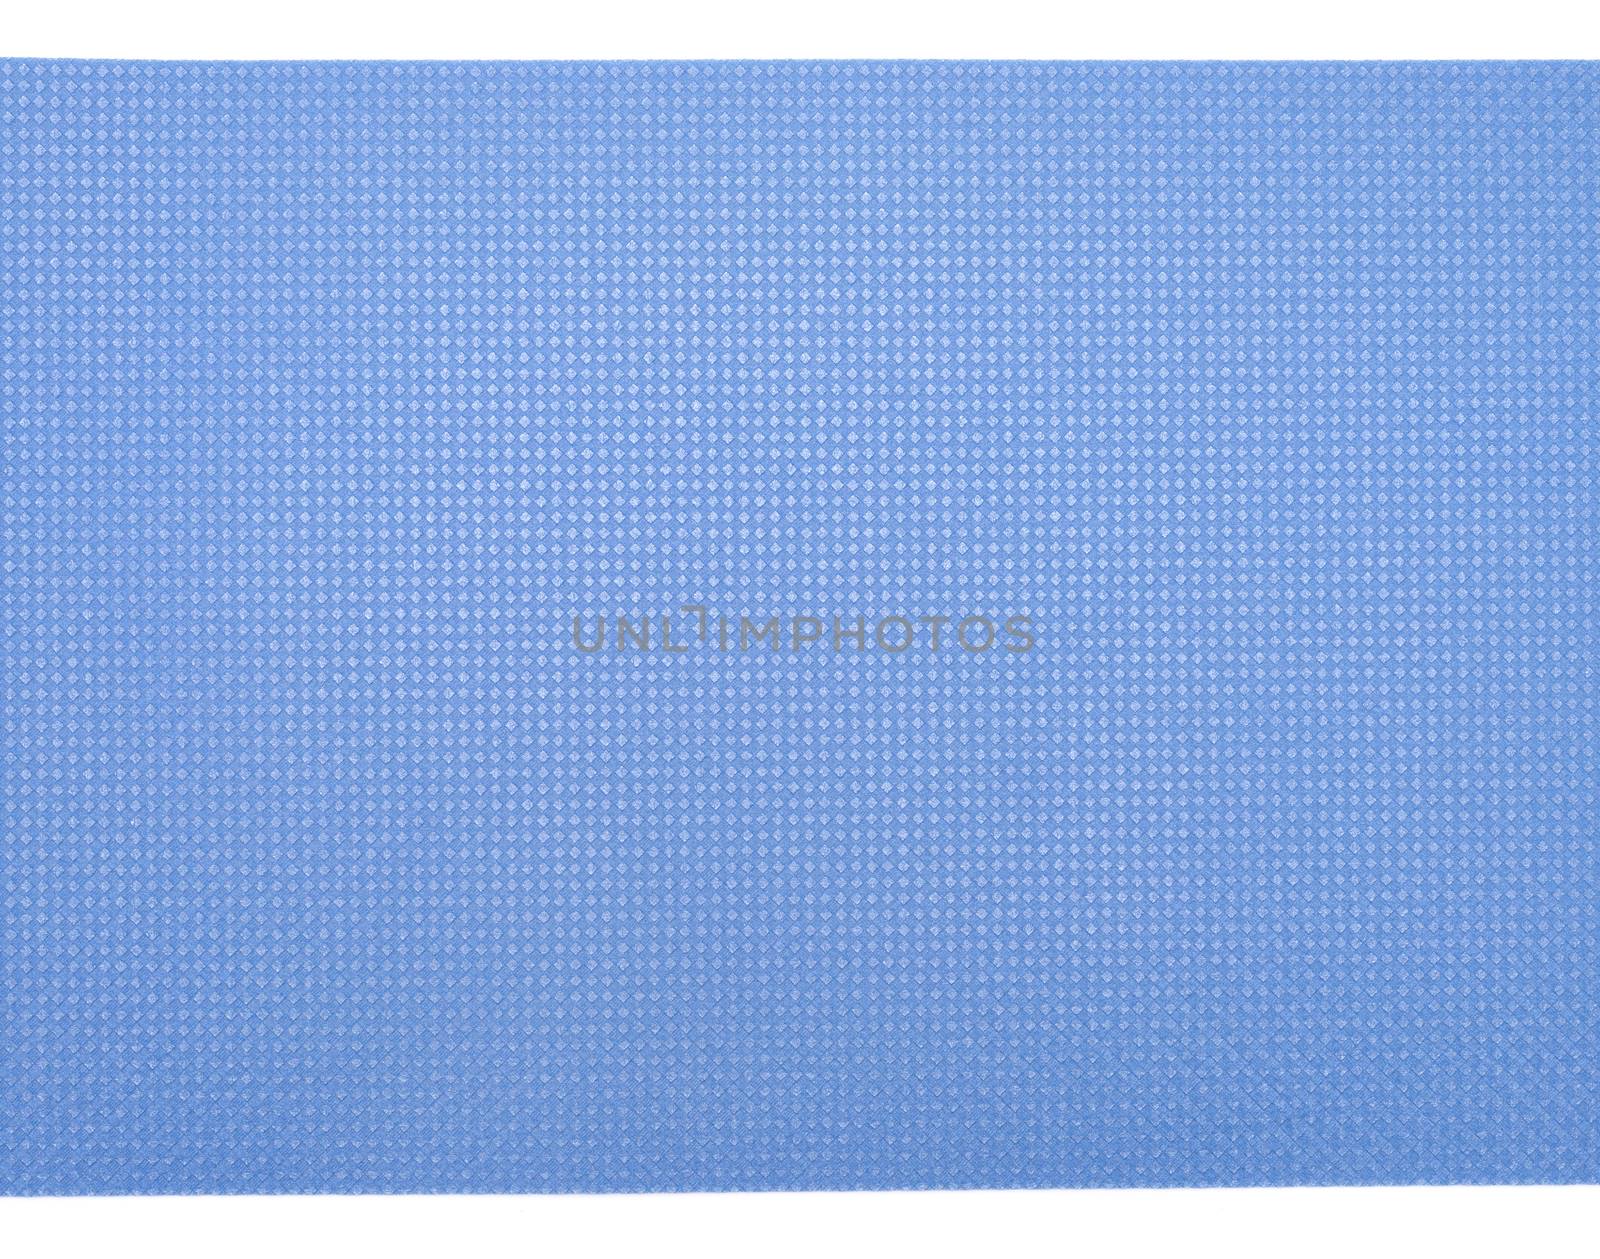 Blue yoga mat texture background by DNKSTUDIO